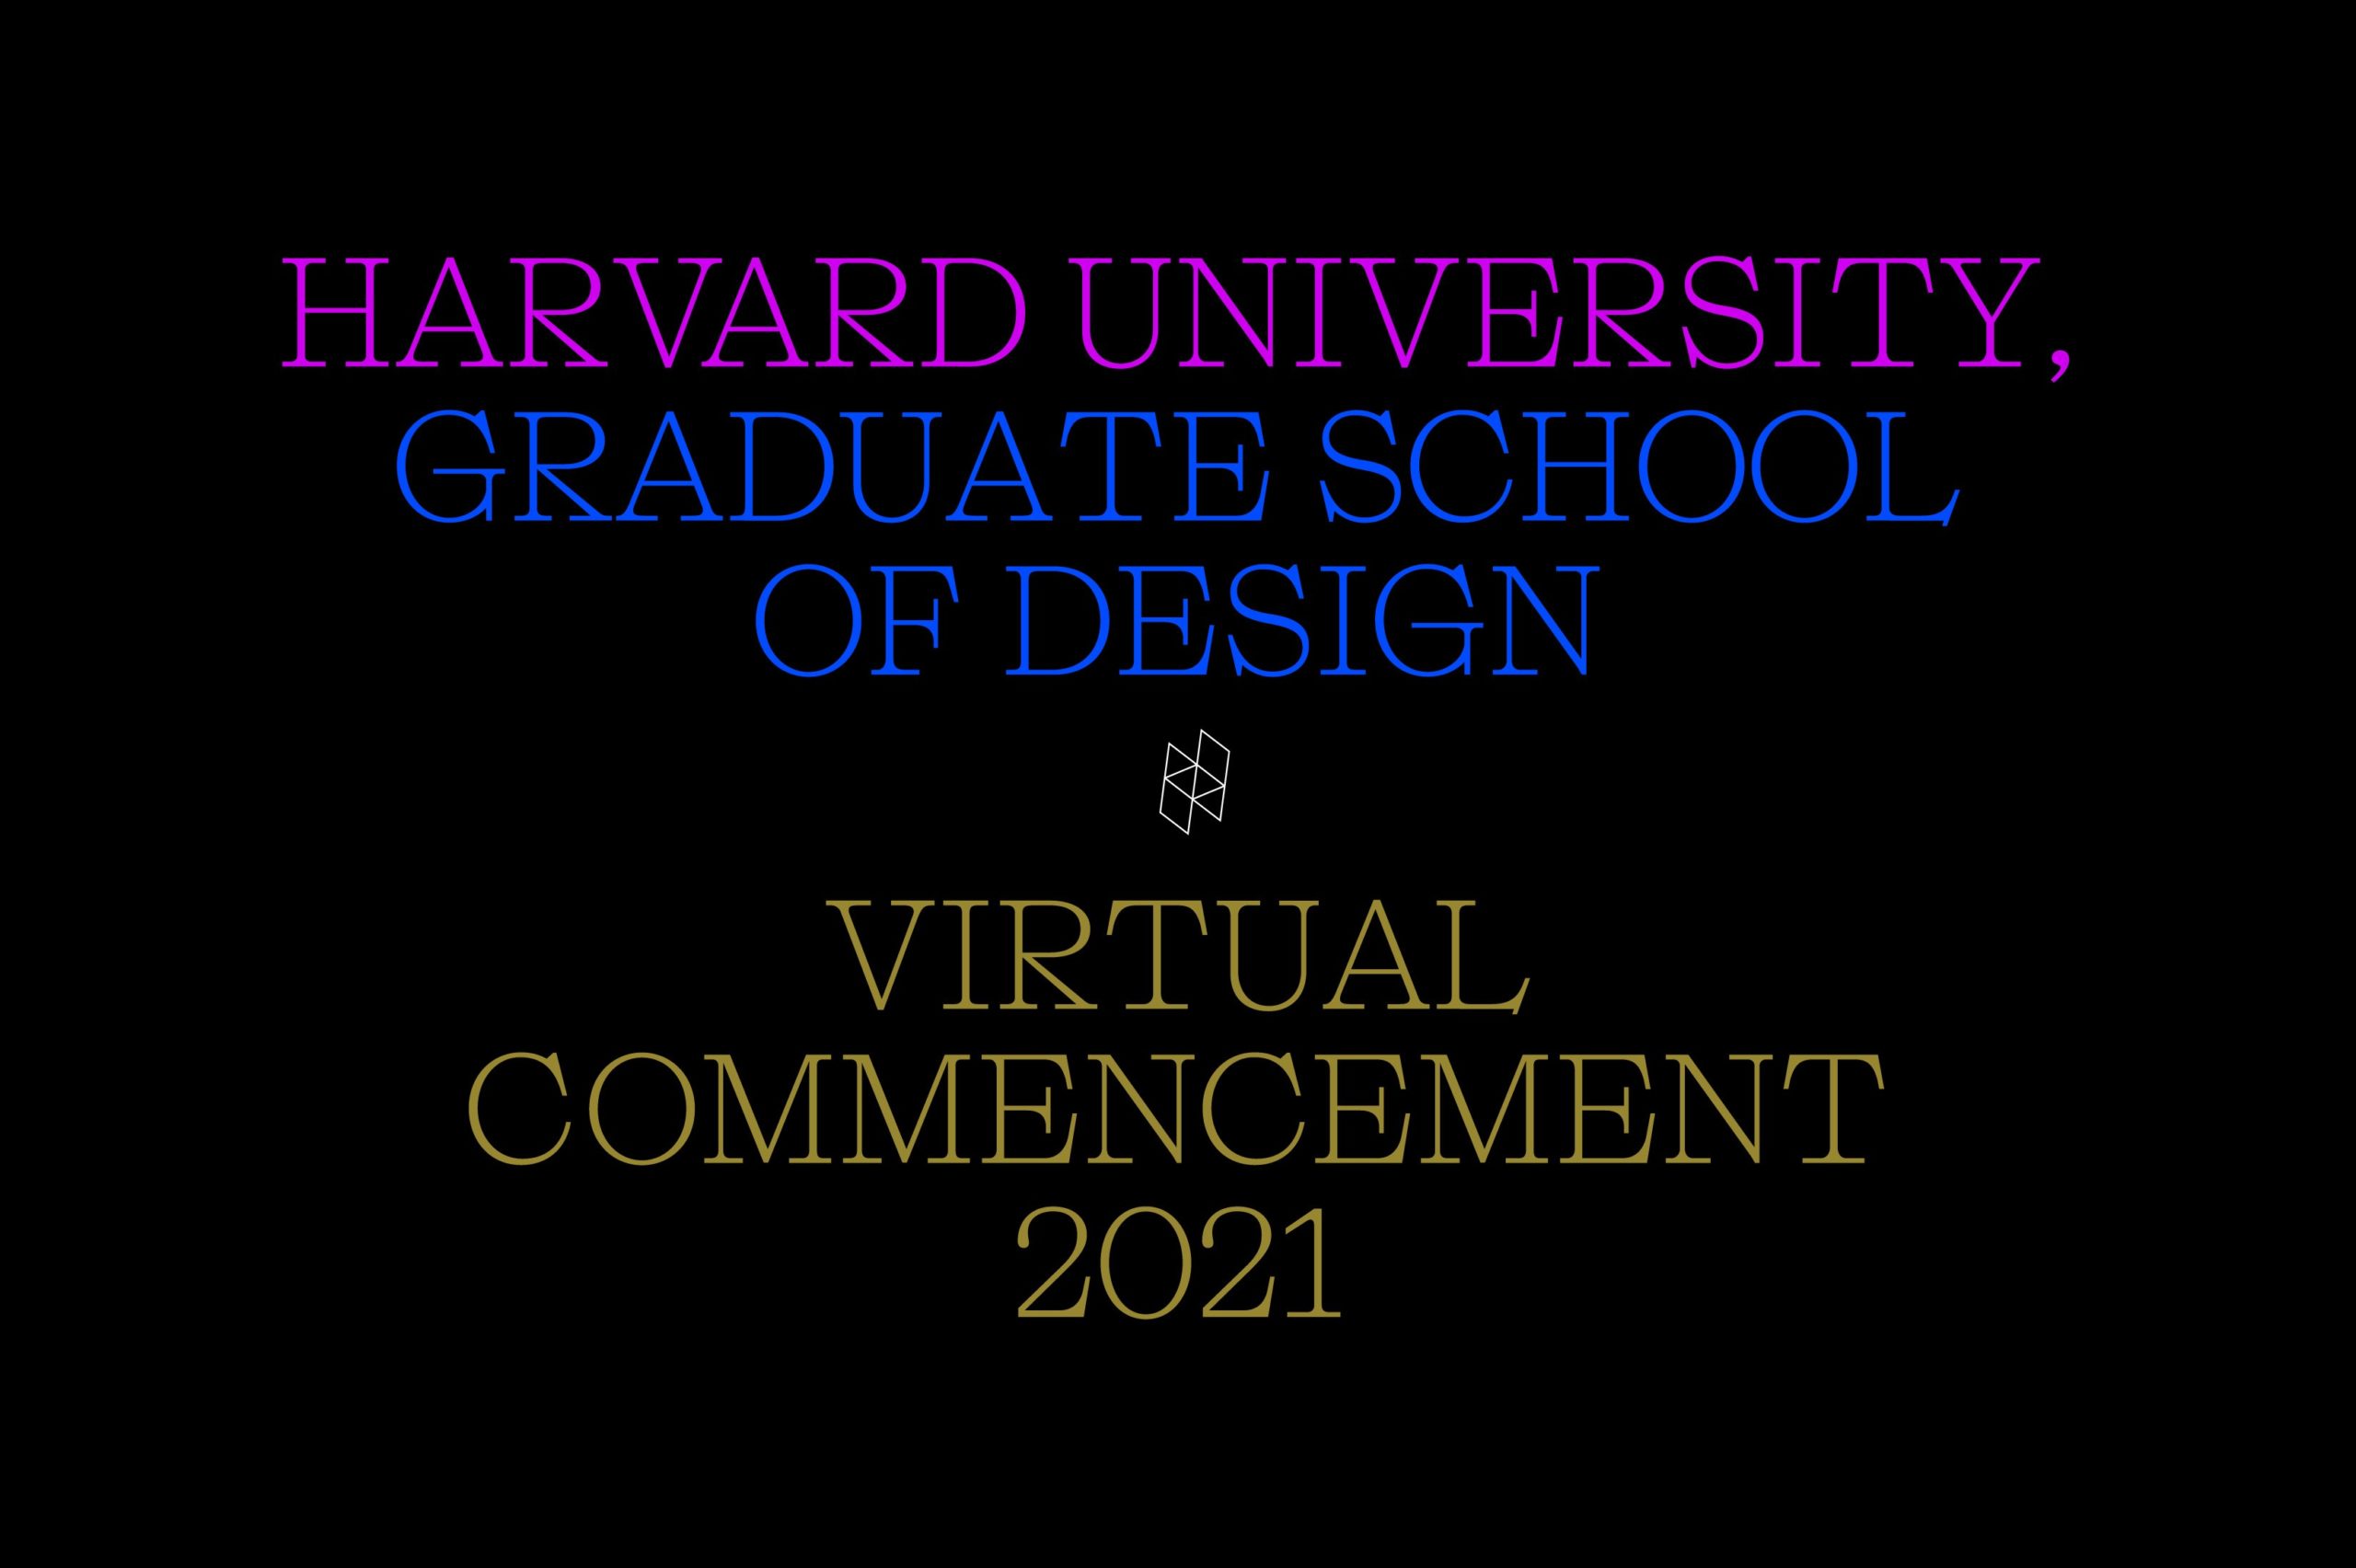 Image text: Harvard University, Graduate School of Design [GSD logo] Virtual Commencement 2021